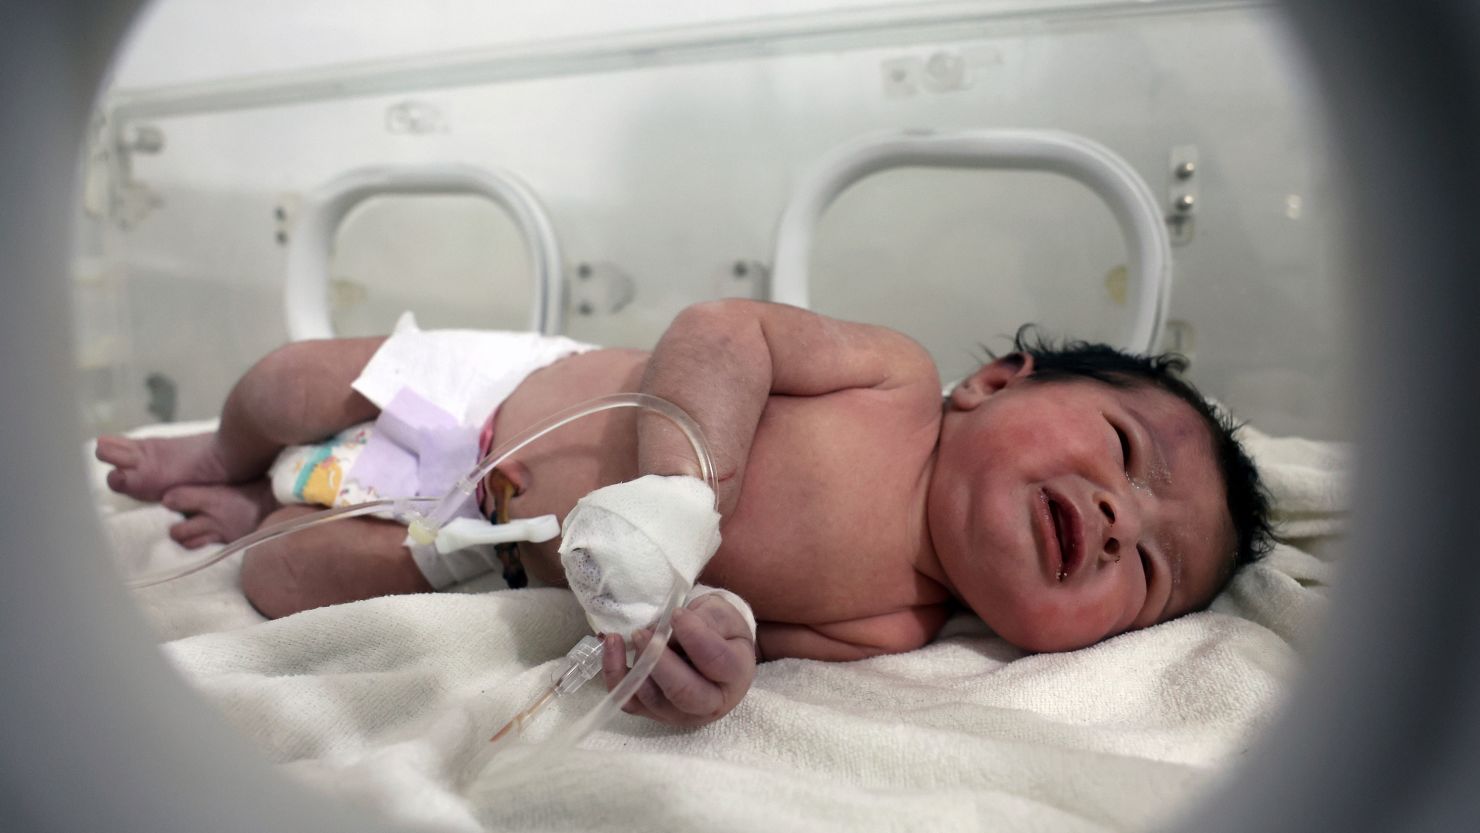 https://media.cnn.com/api/v1/images/stellar/prod/230207133156-01-syria-quake-infant-survivor-0207.jpg?c=16x9&q=h_833,w_1480,c_fill